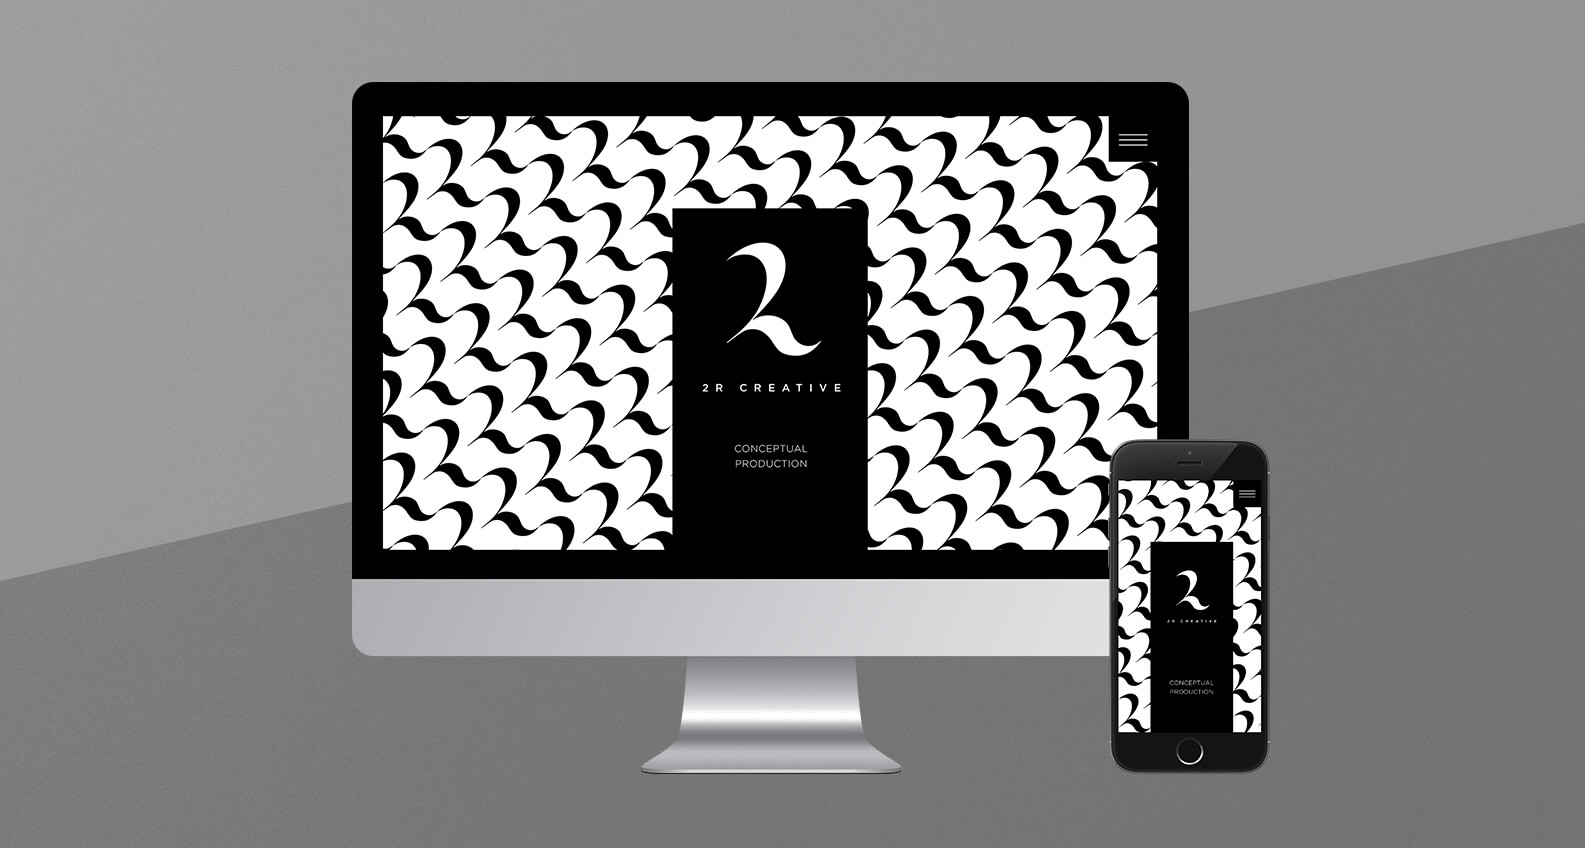 2R Creative web design by Jacober Creative